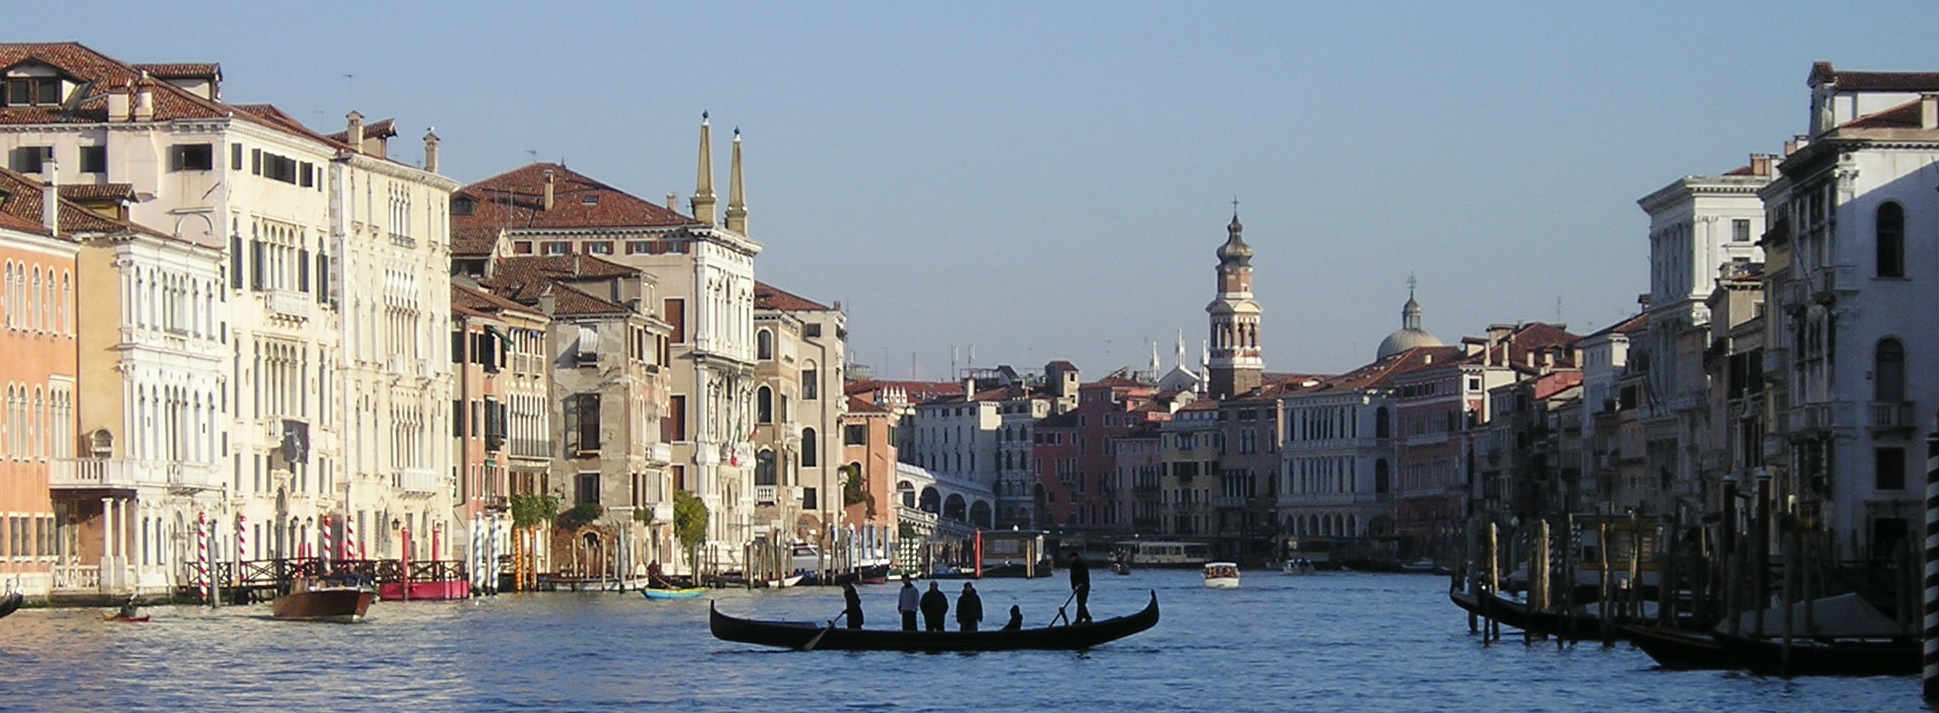 Rossana Venice tourist guide - Venice Kids Tours